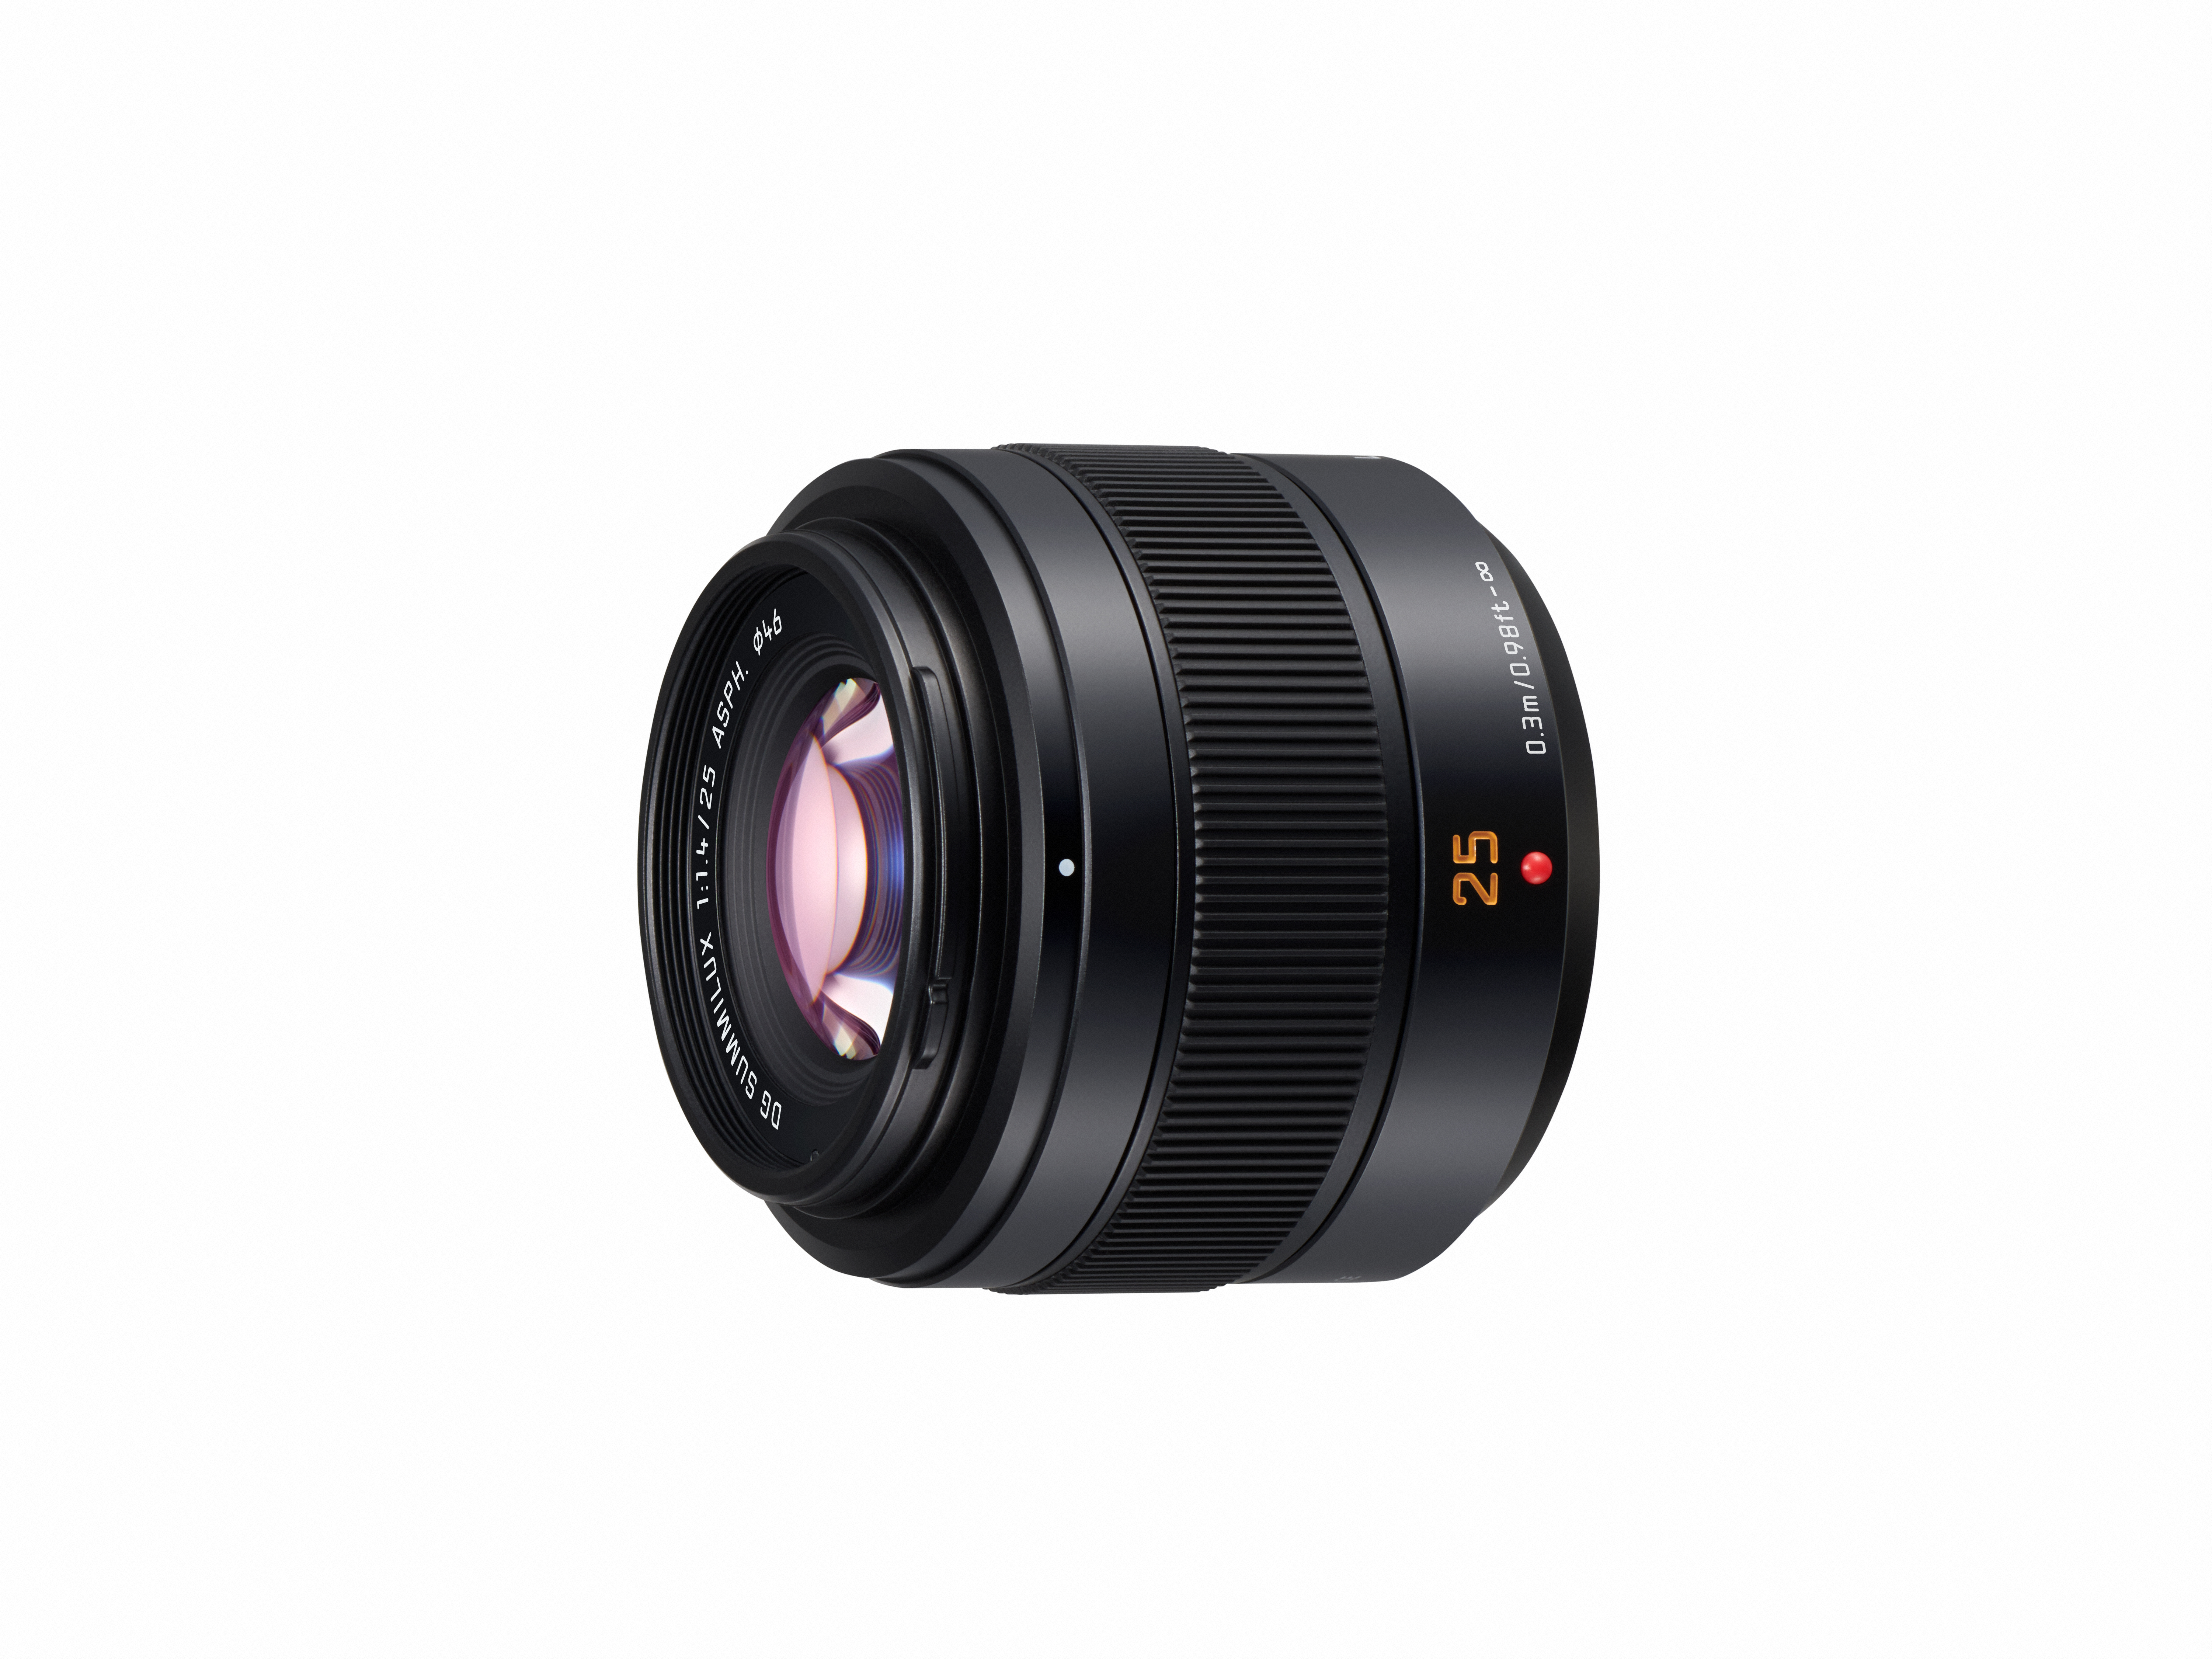 Panasonic’s Leica Summilux 25mm F1.4 II ASPH Lens Will Cost $699.99